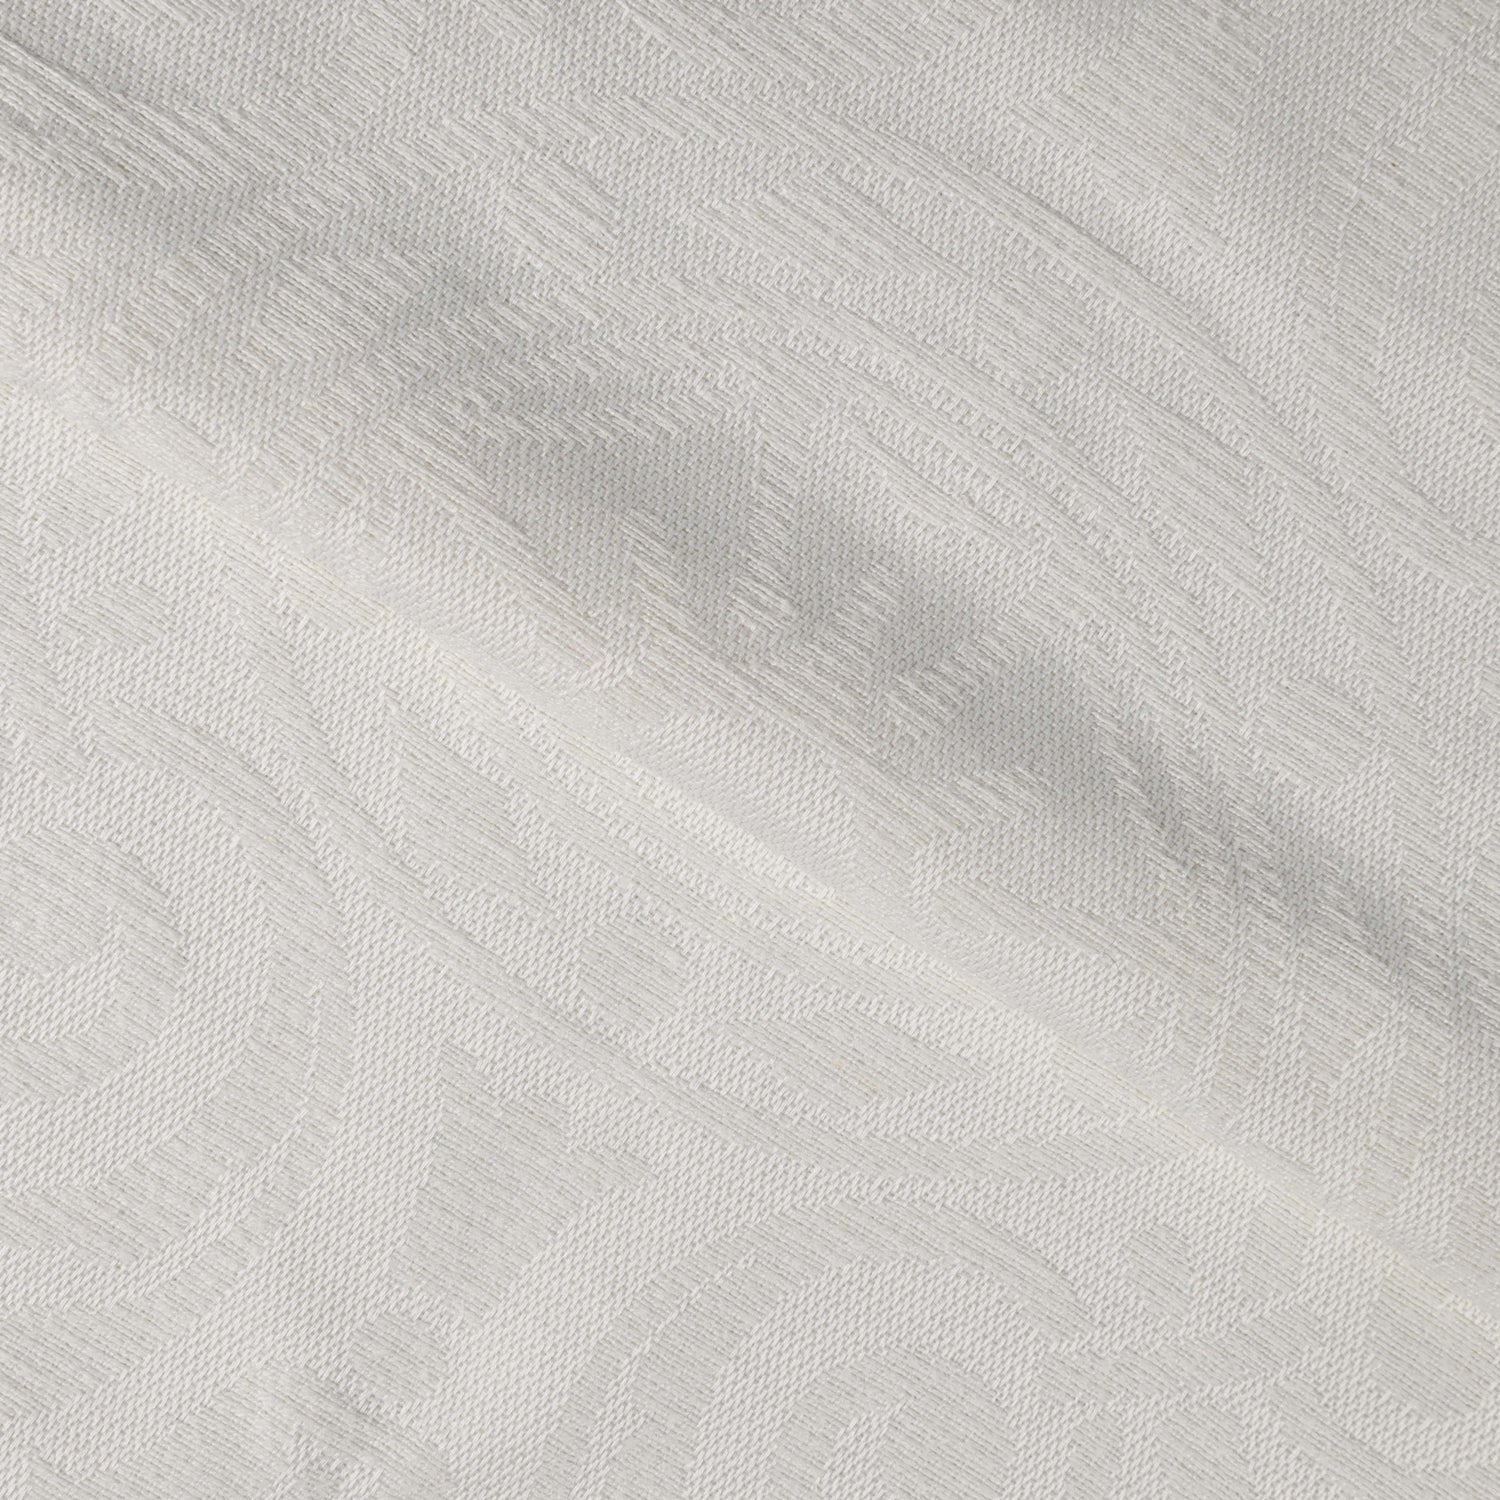 Superior Adalie Cotton Blend Woven Jacquard Vintage Medallion Lightweight Bedspread and Sham Set - Off White